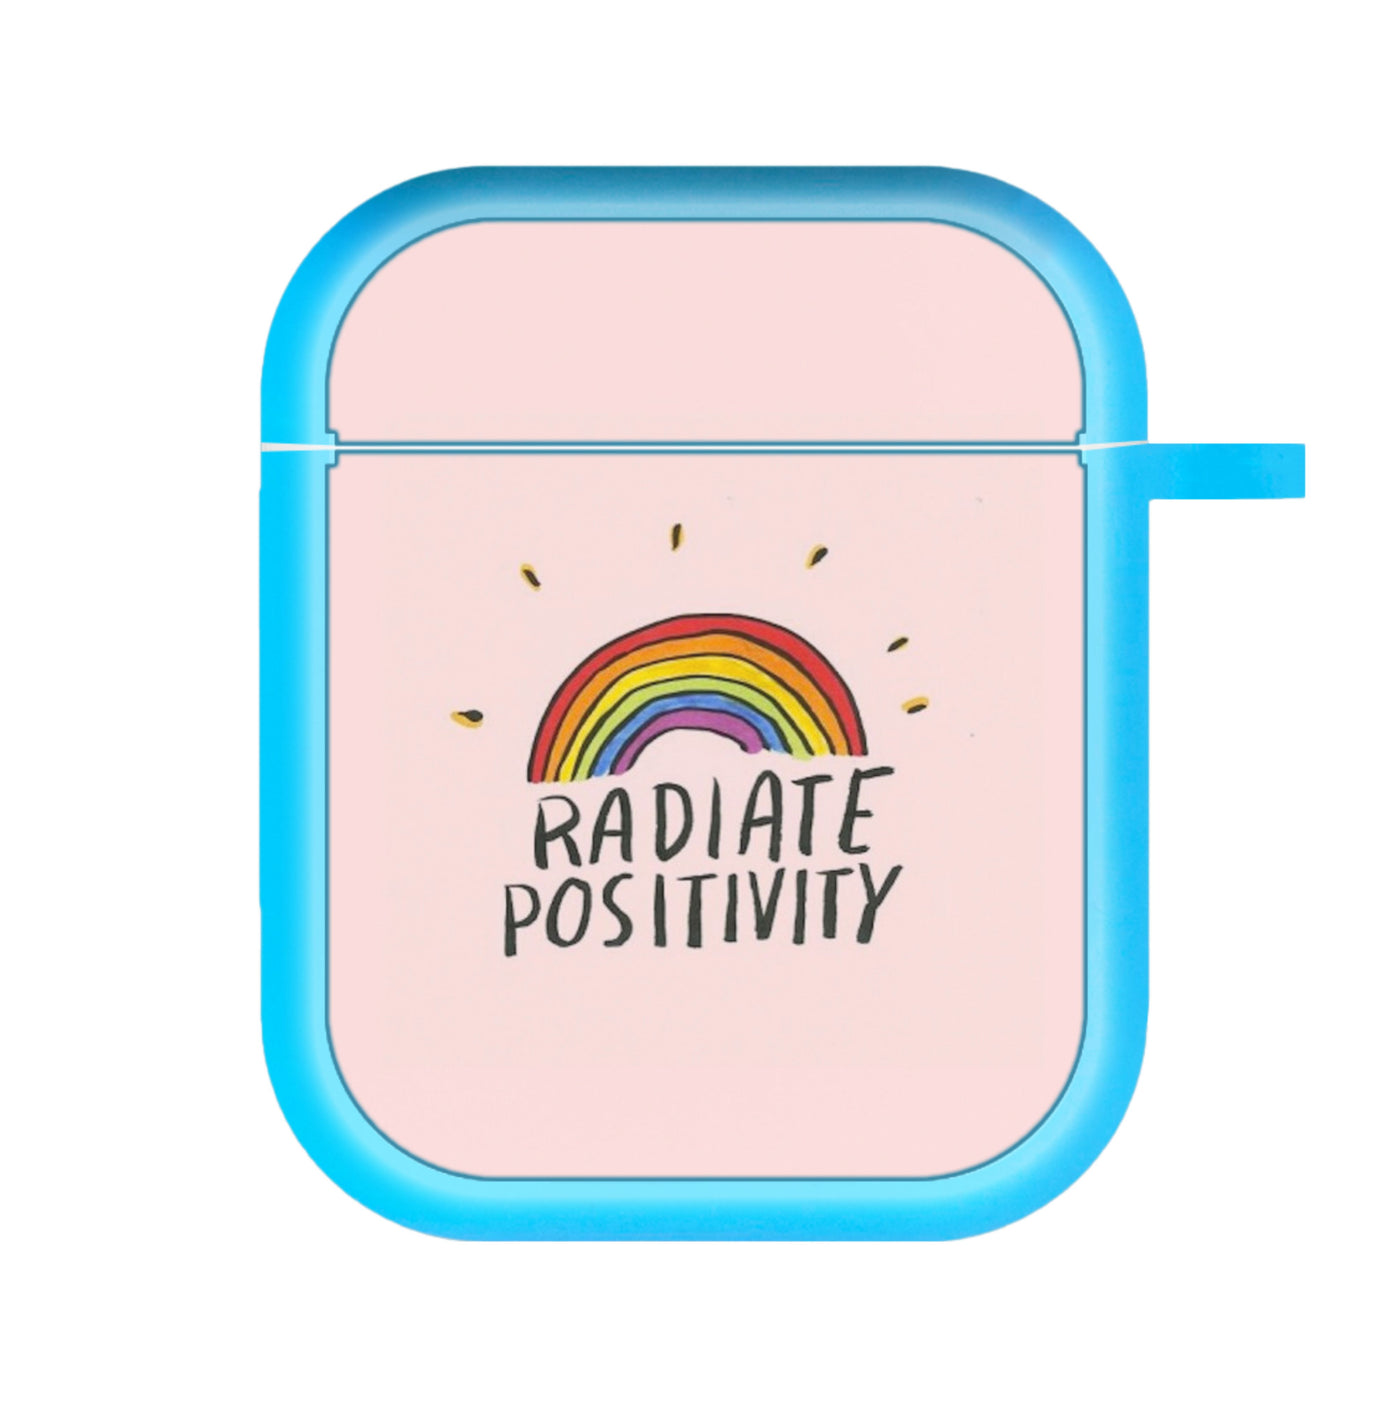 Radiate Positivity Rainbow - Positivity AirPods Case